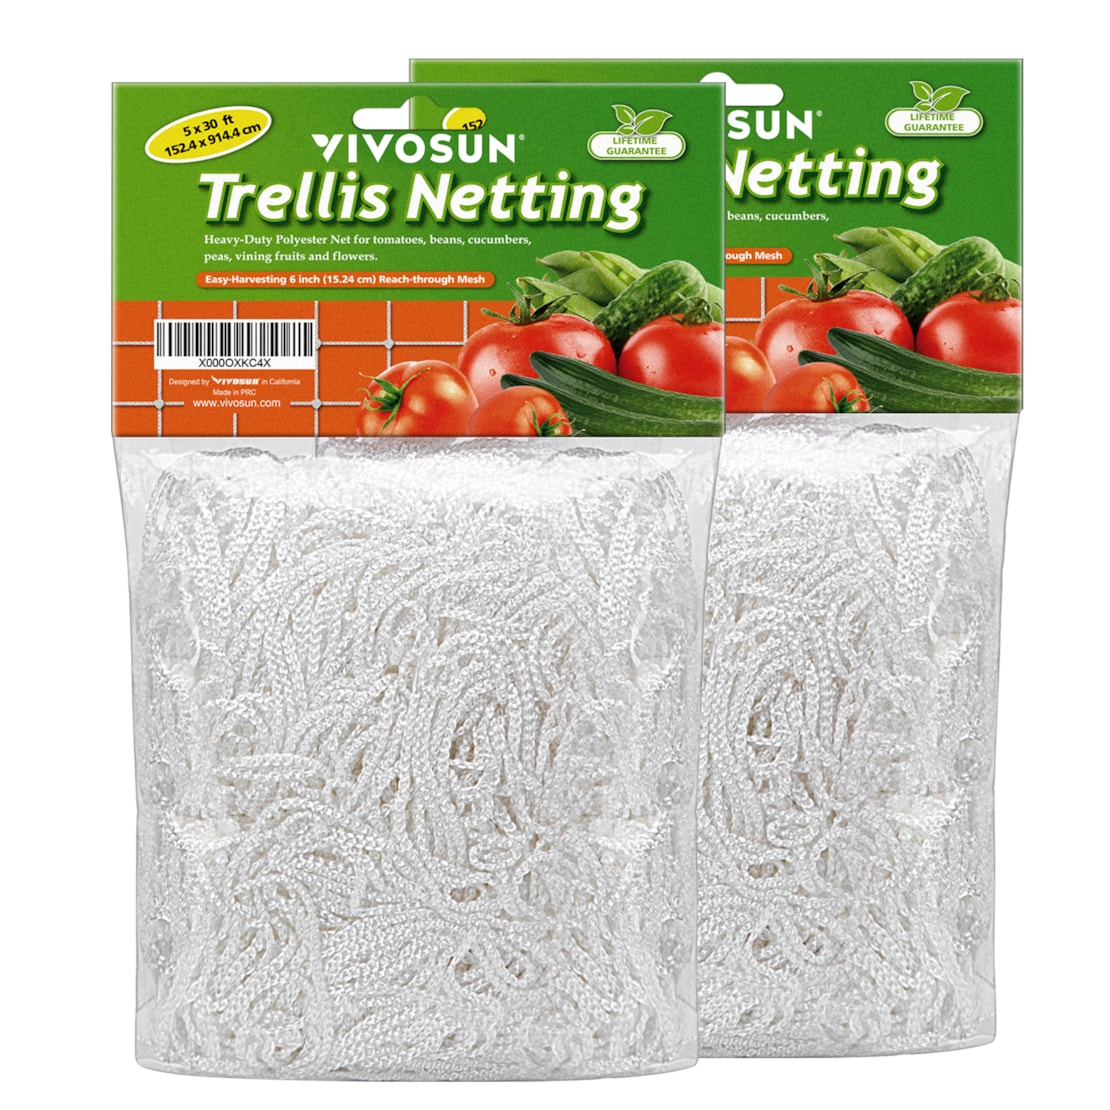 VIVOSUN 5 x 30 ft Heavy-duty Polyester Plant Trellis Netting 2-Pack